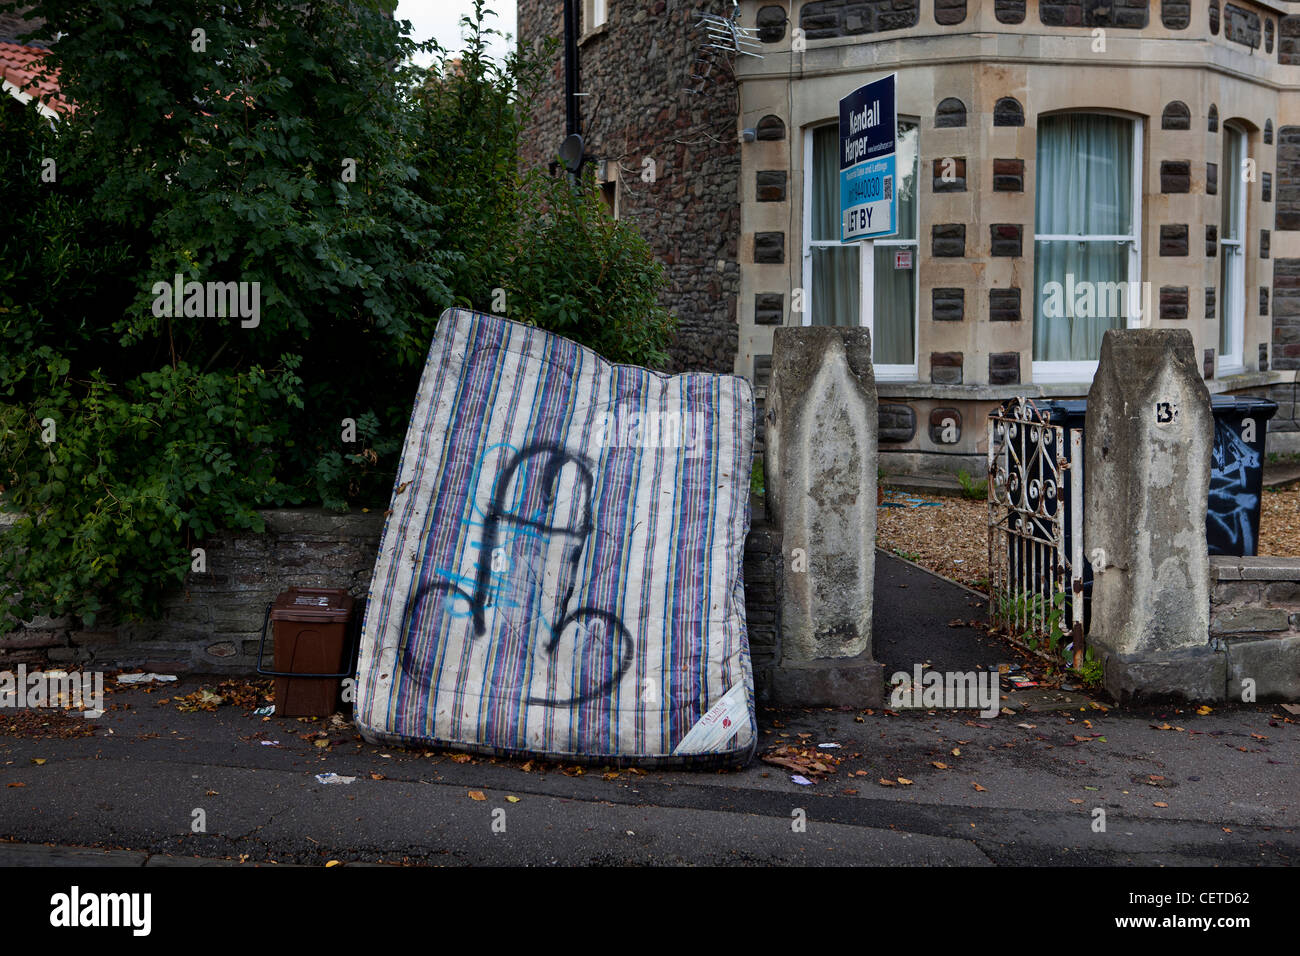 discarded-mattress-outside-a-house-in-bristol-uk-CETD62.jpg